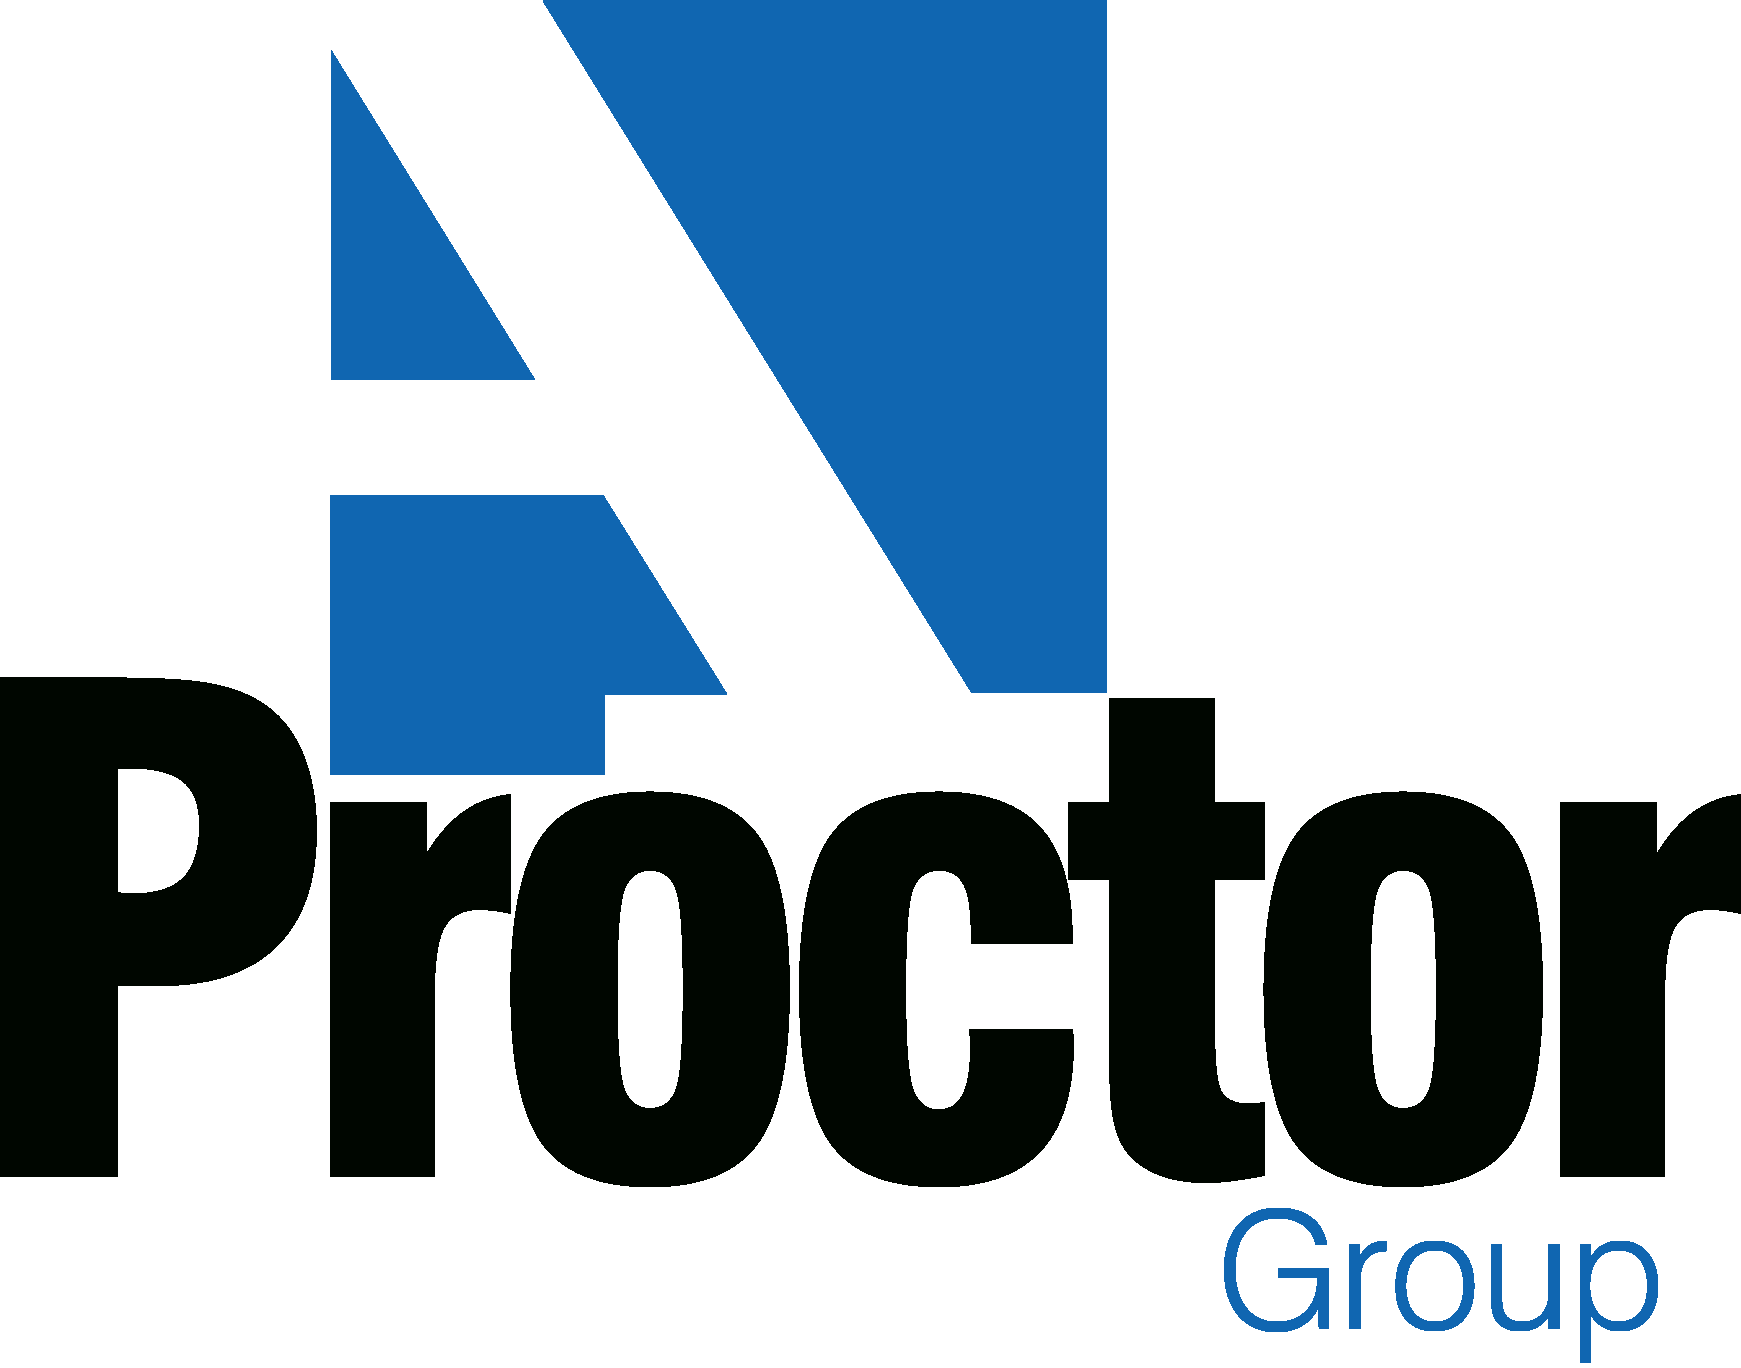 A Proctor Group Ltd